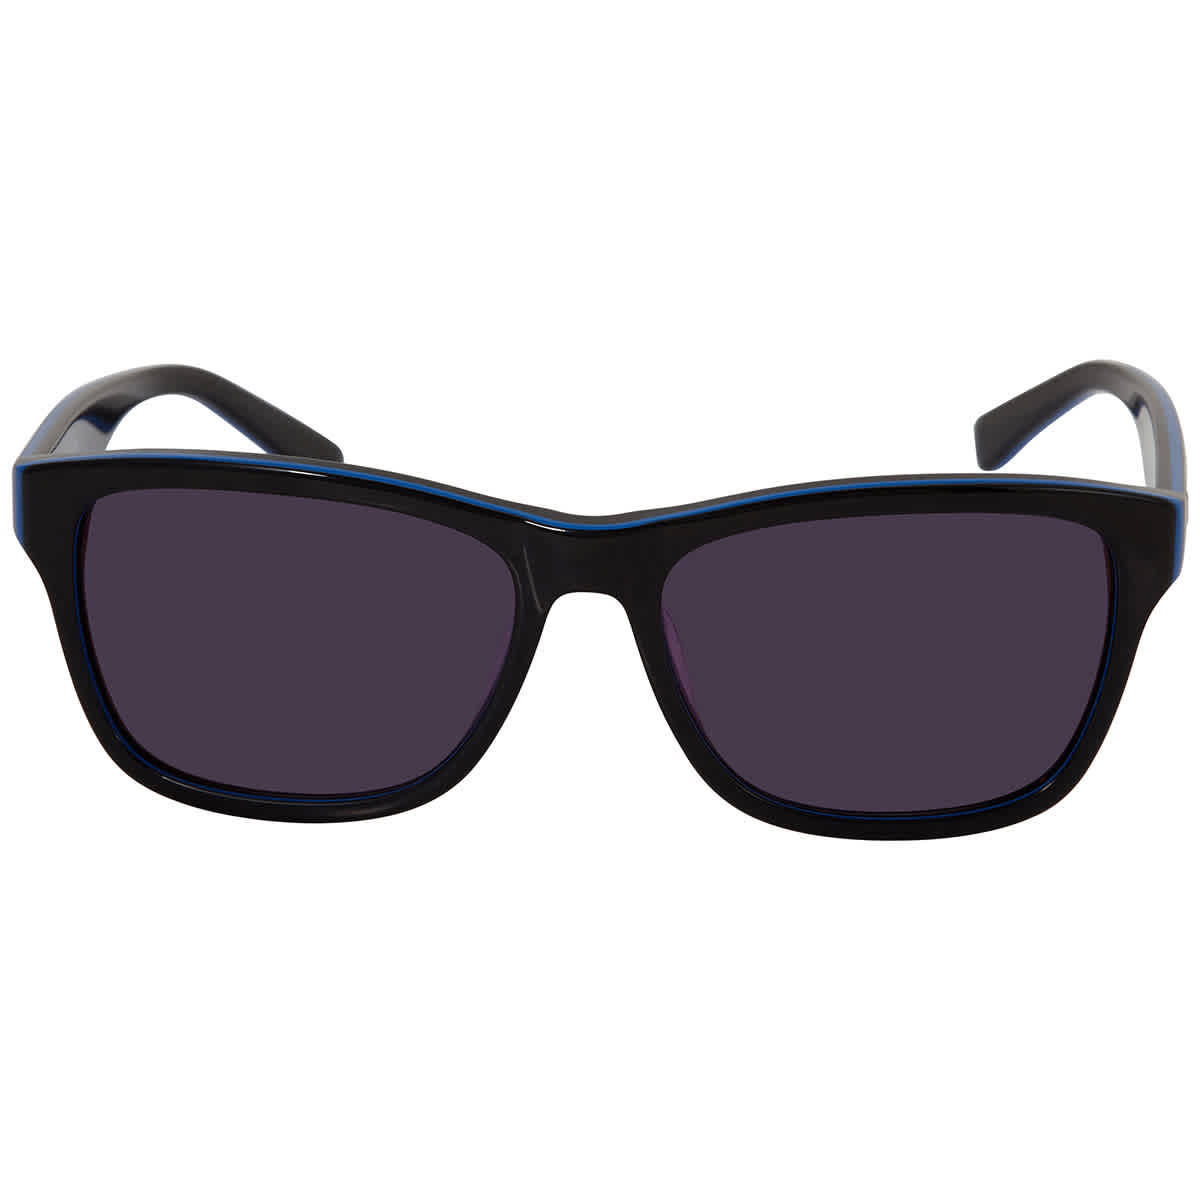 Lacoste Unisex Black Square Sunglasses L683s 6 55 In Black,grey